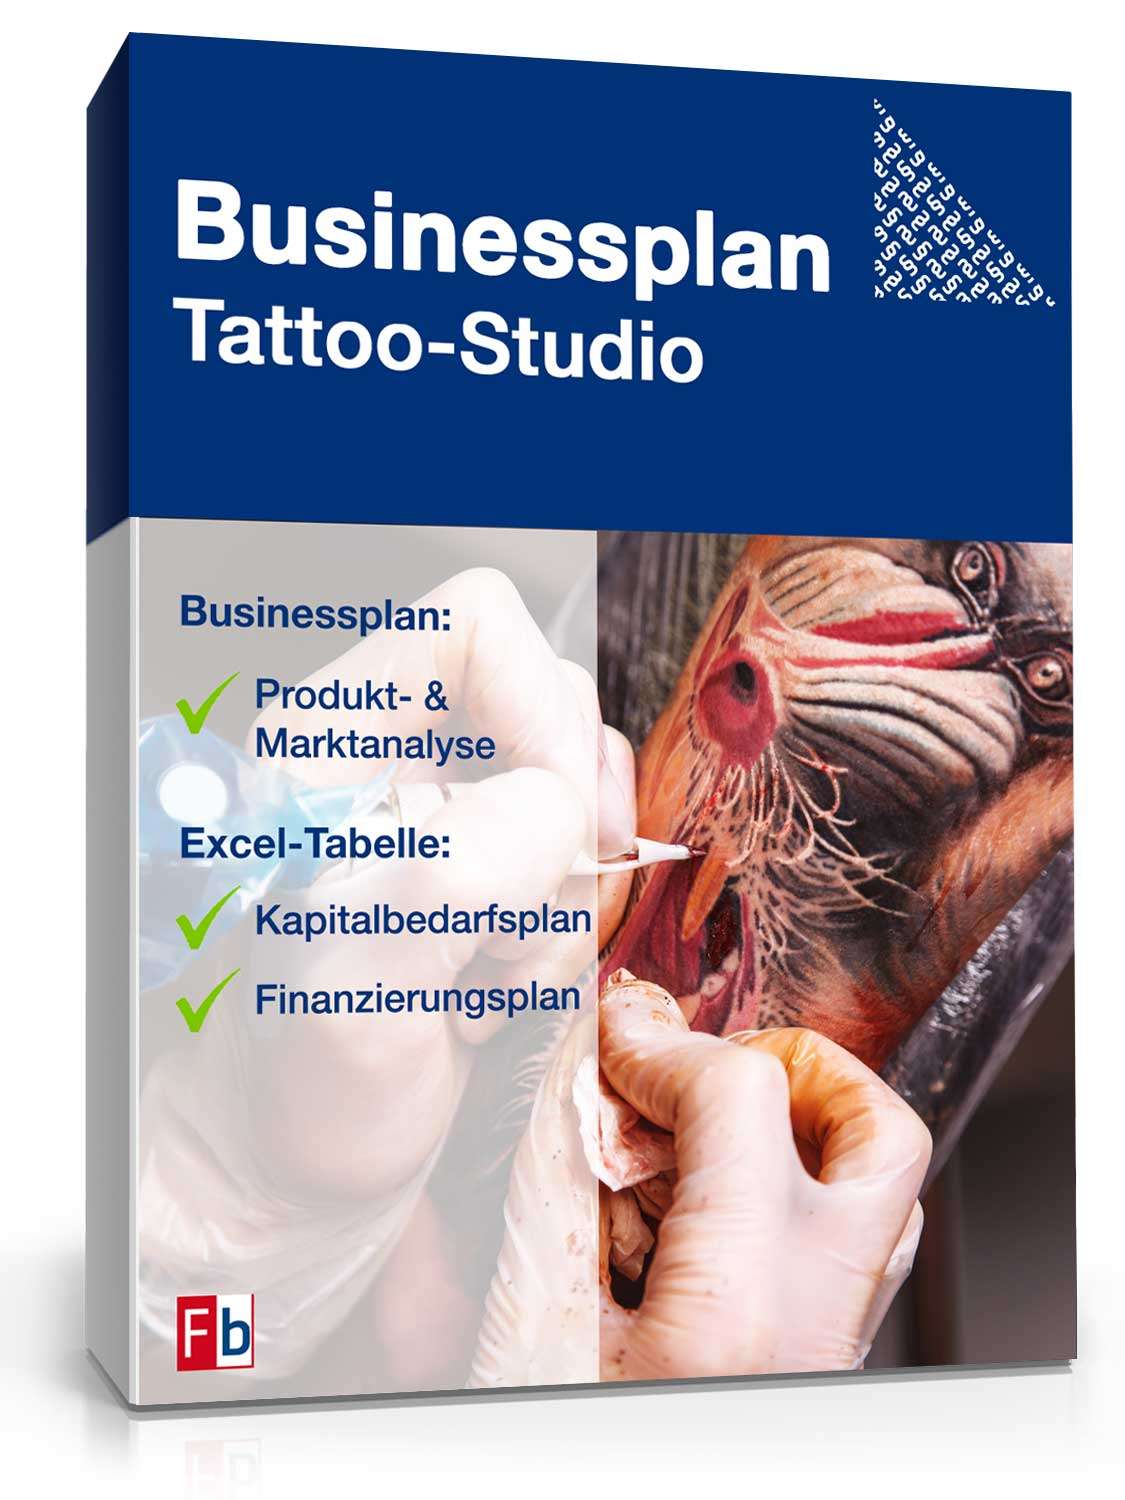 Hauptbild des Produkts: Businessplan Tattoo-Studio